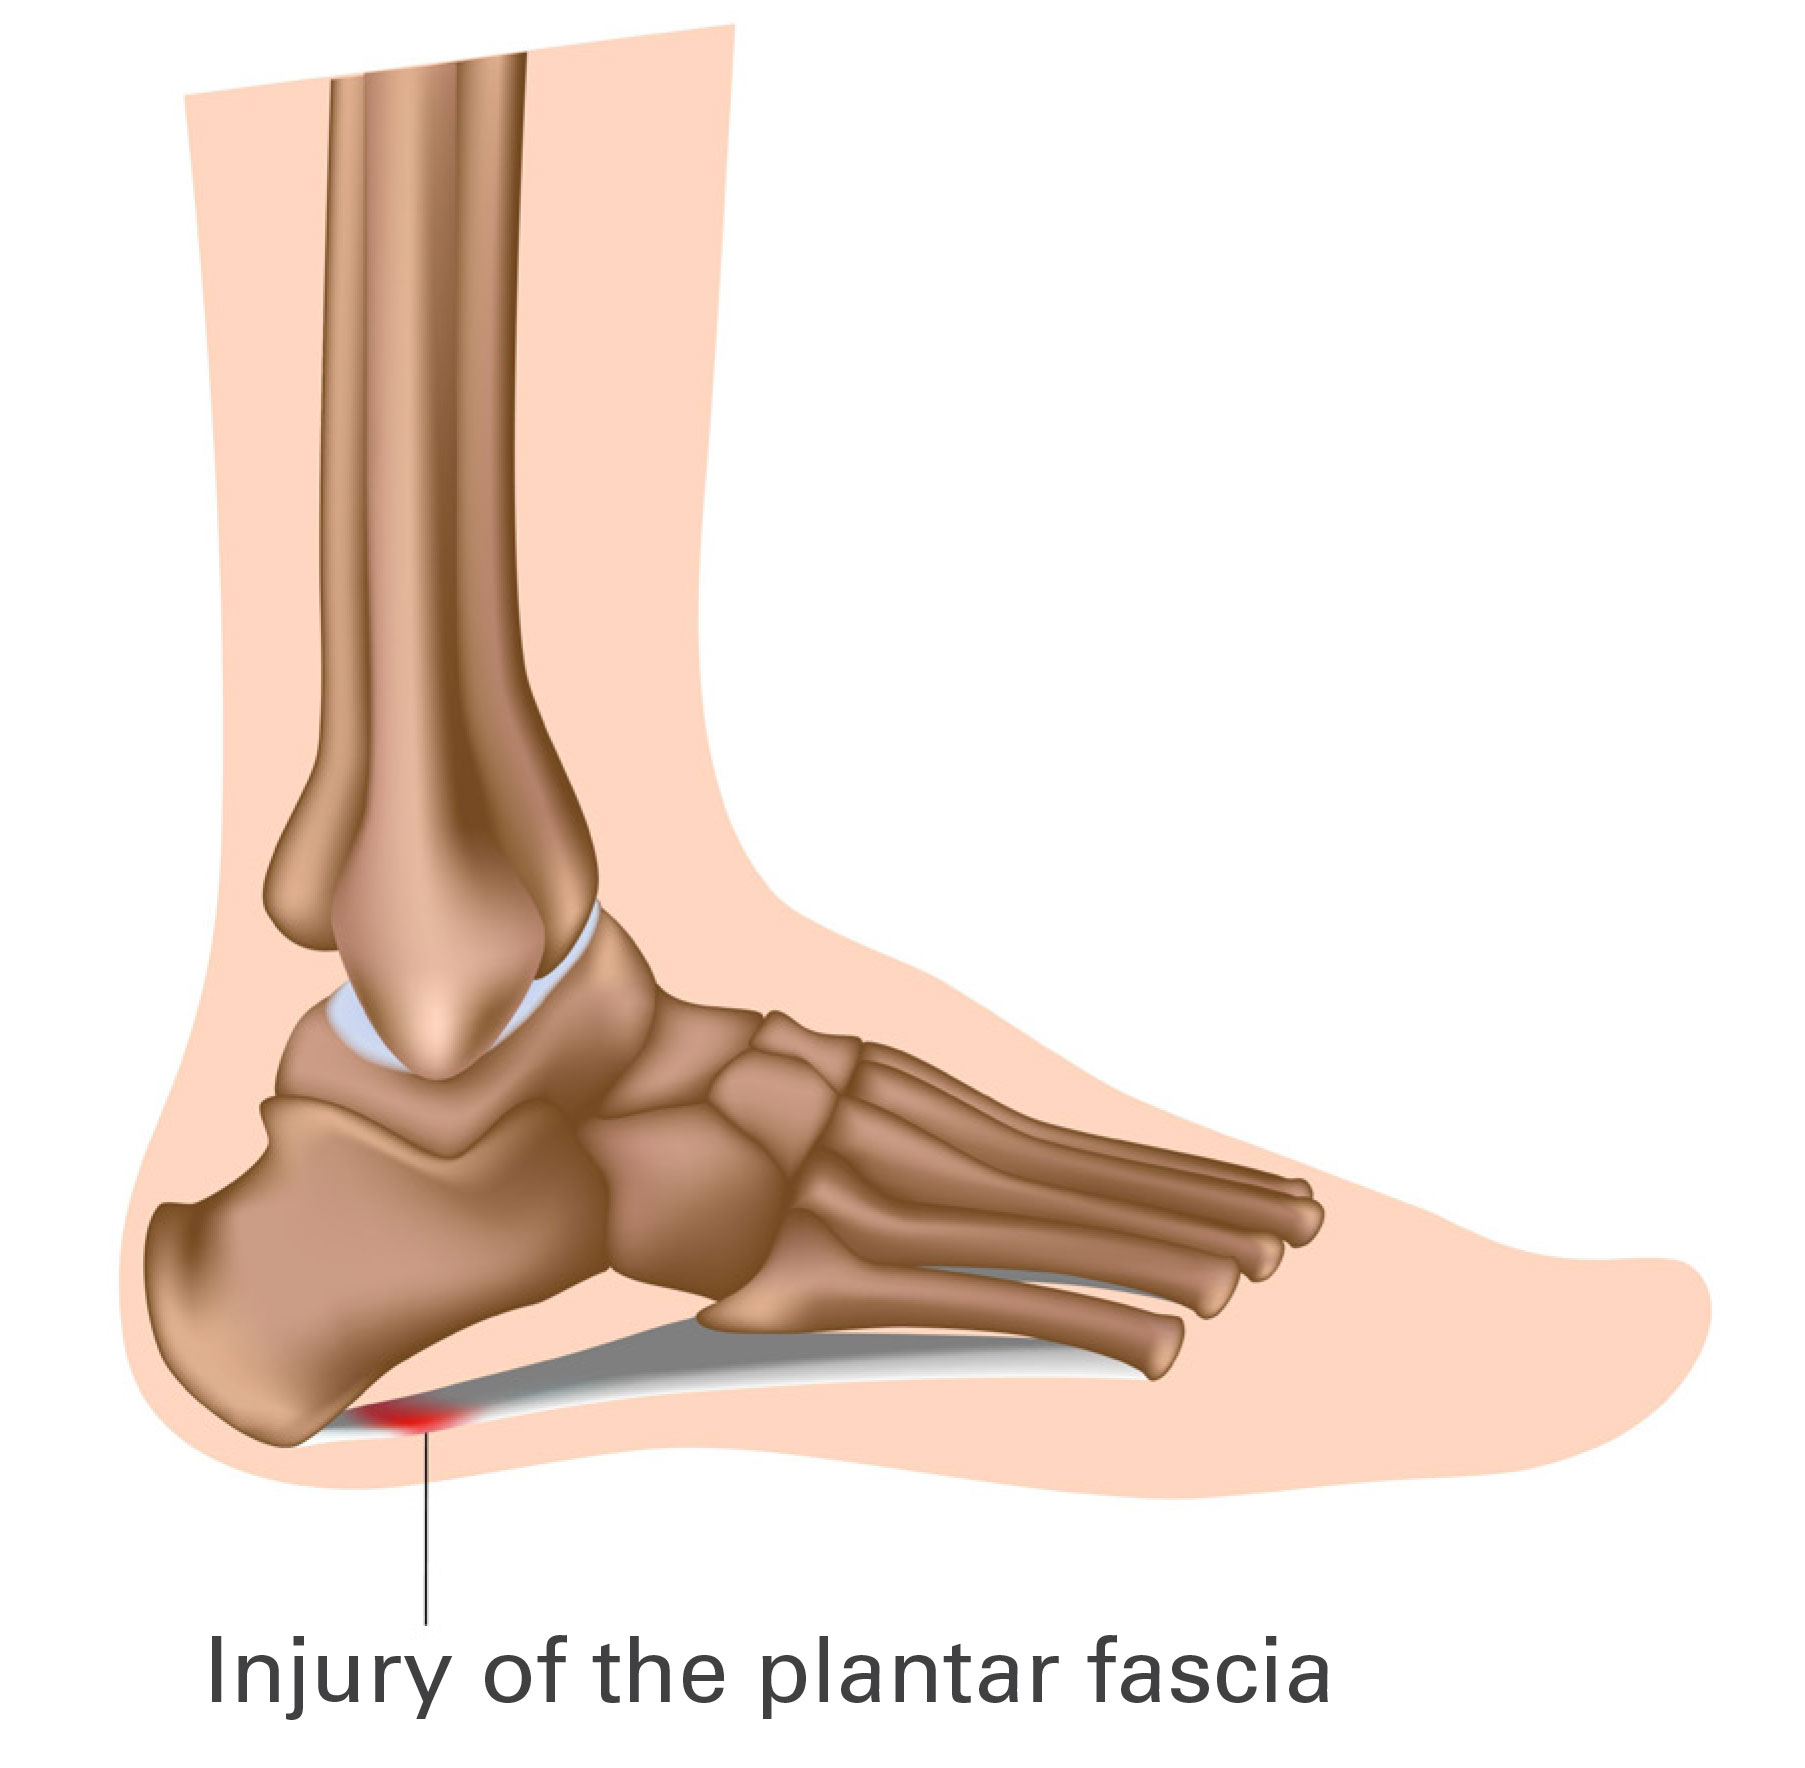 Diagram showing injury of the plantar fascia